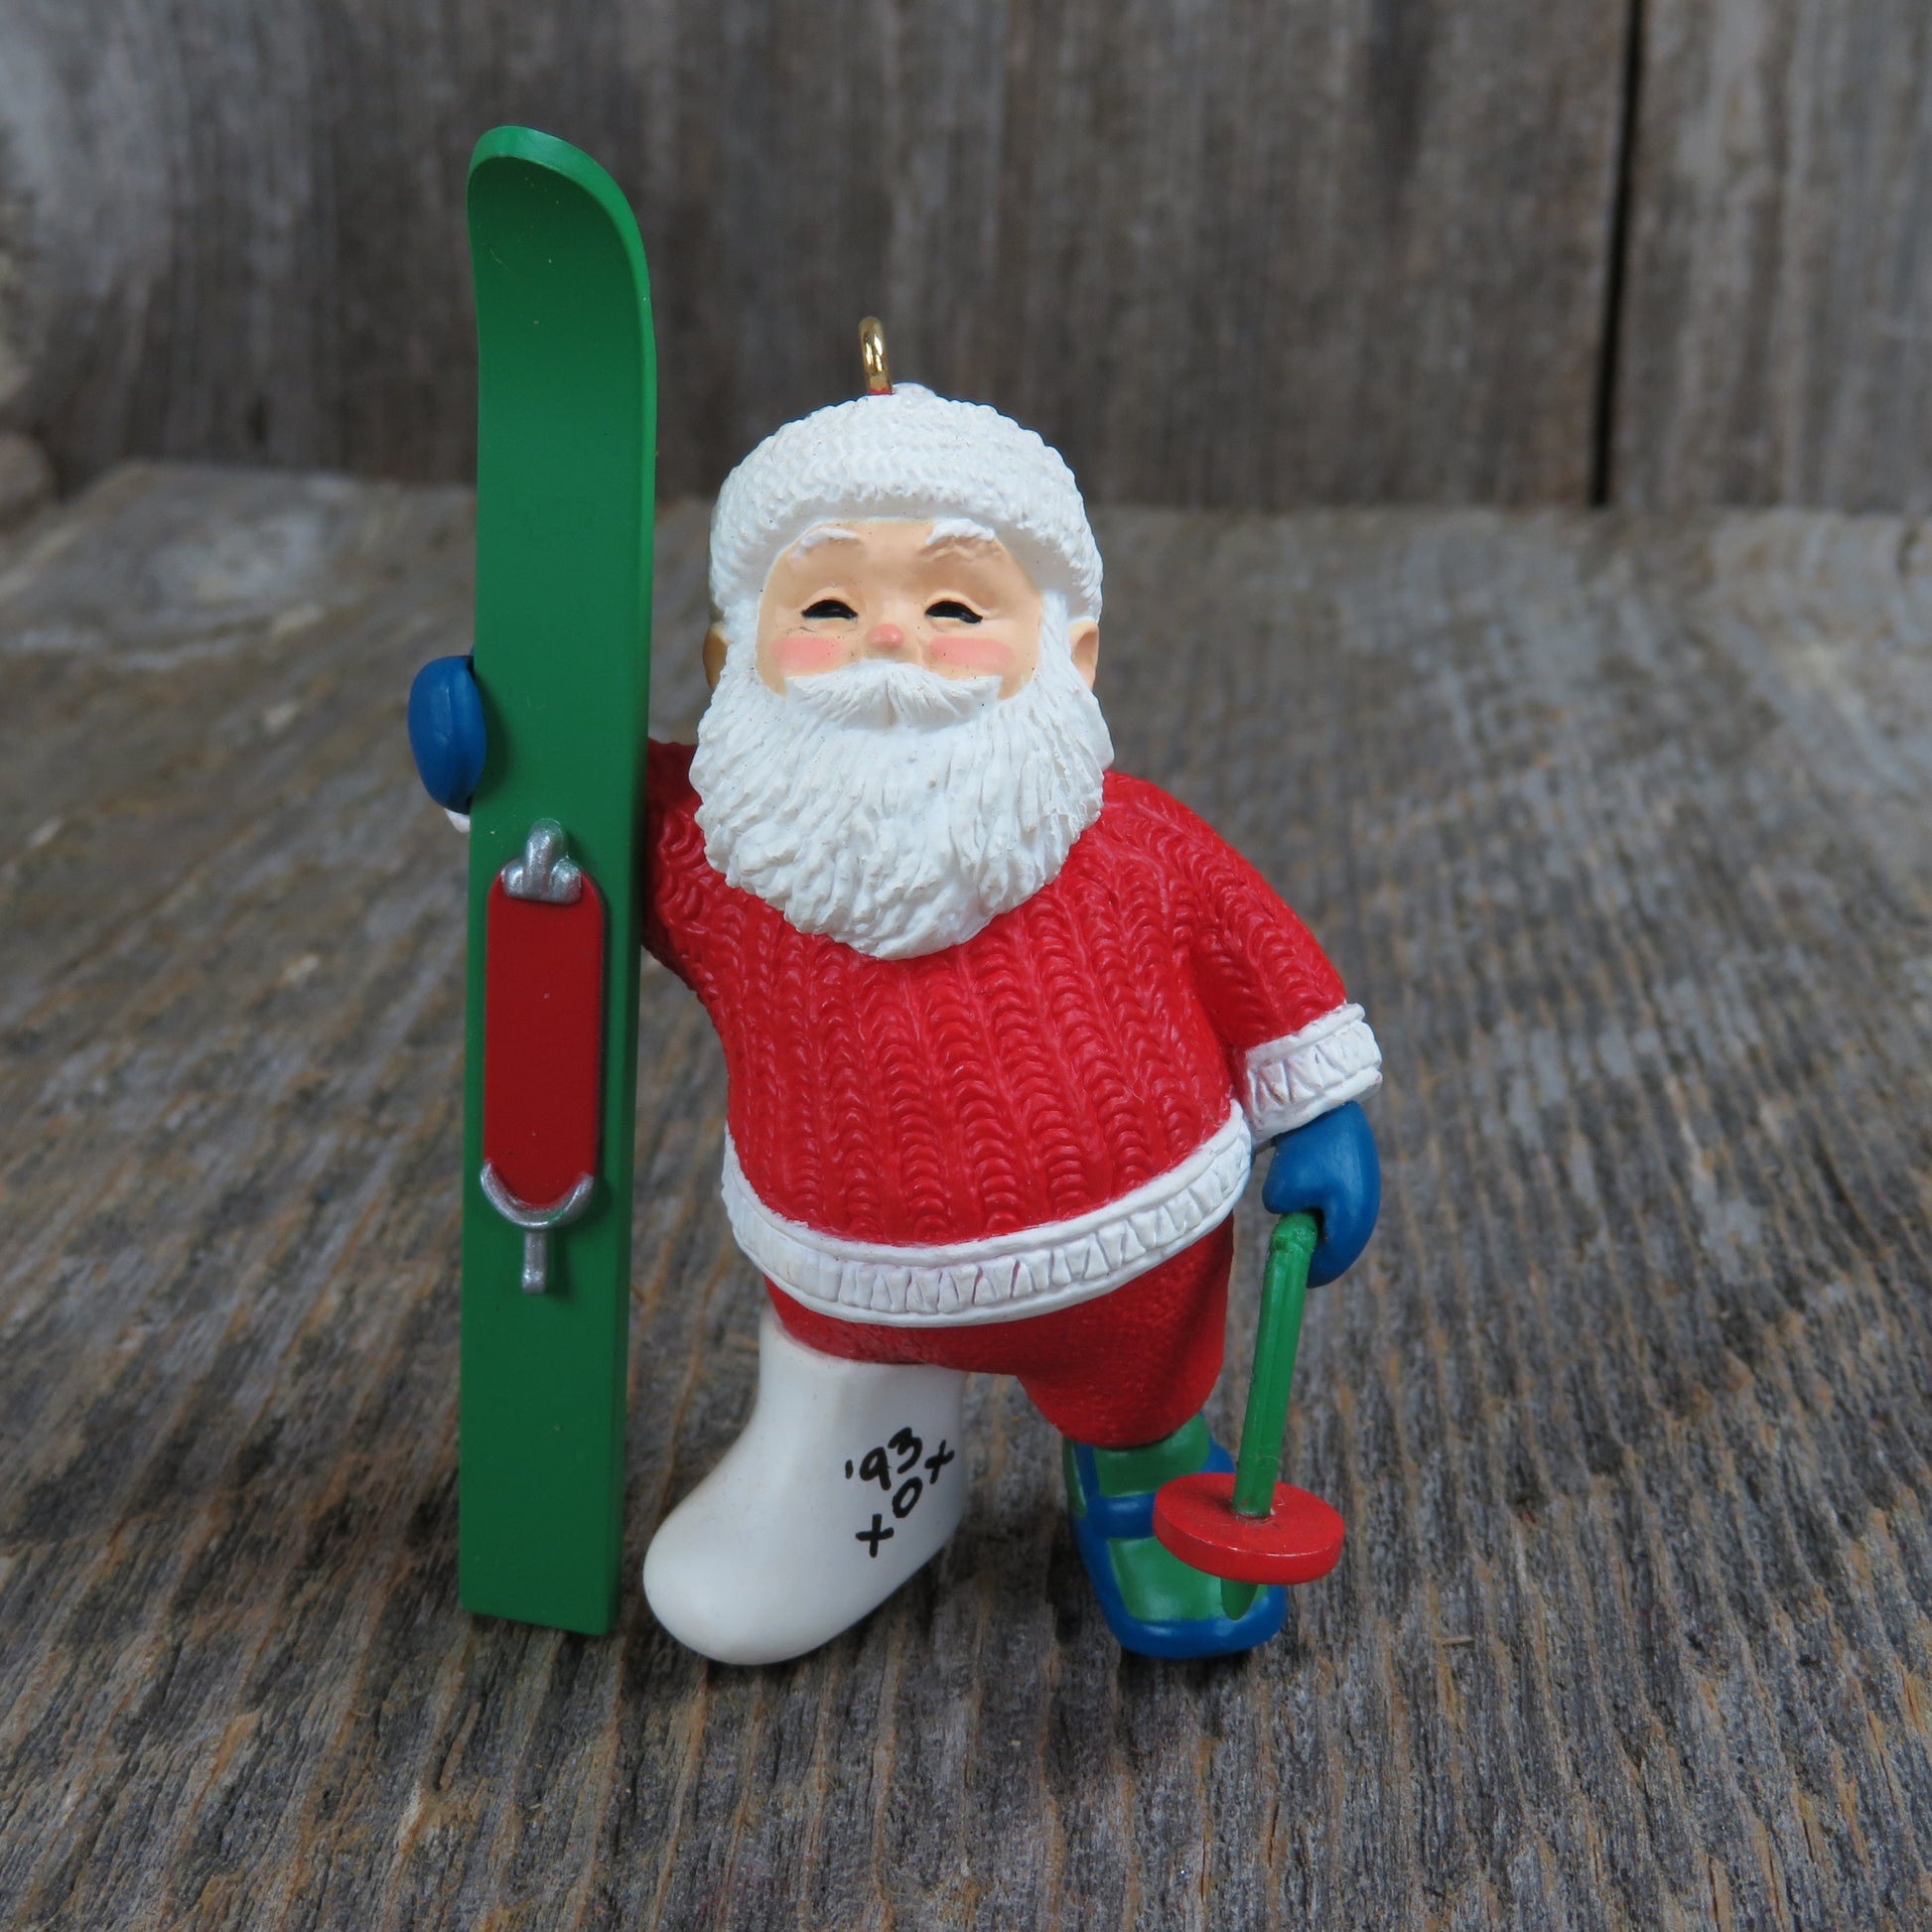 Hallmark Ornament Santa Skiing Vintage 1993 Christmas Break Accident Broken Leg - At Grandma's Table